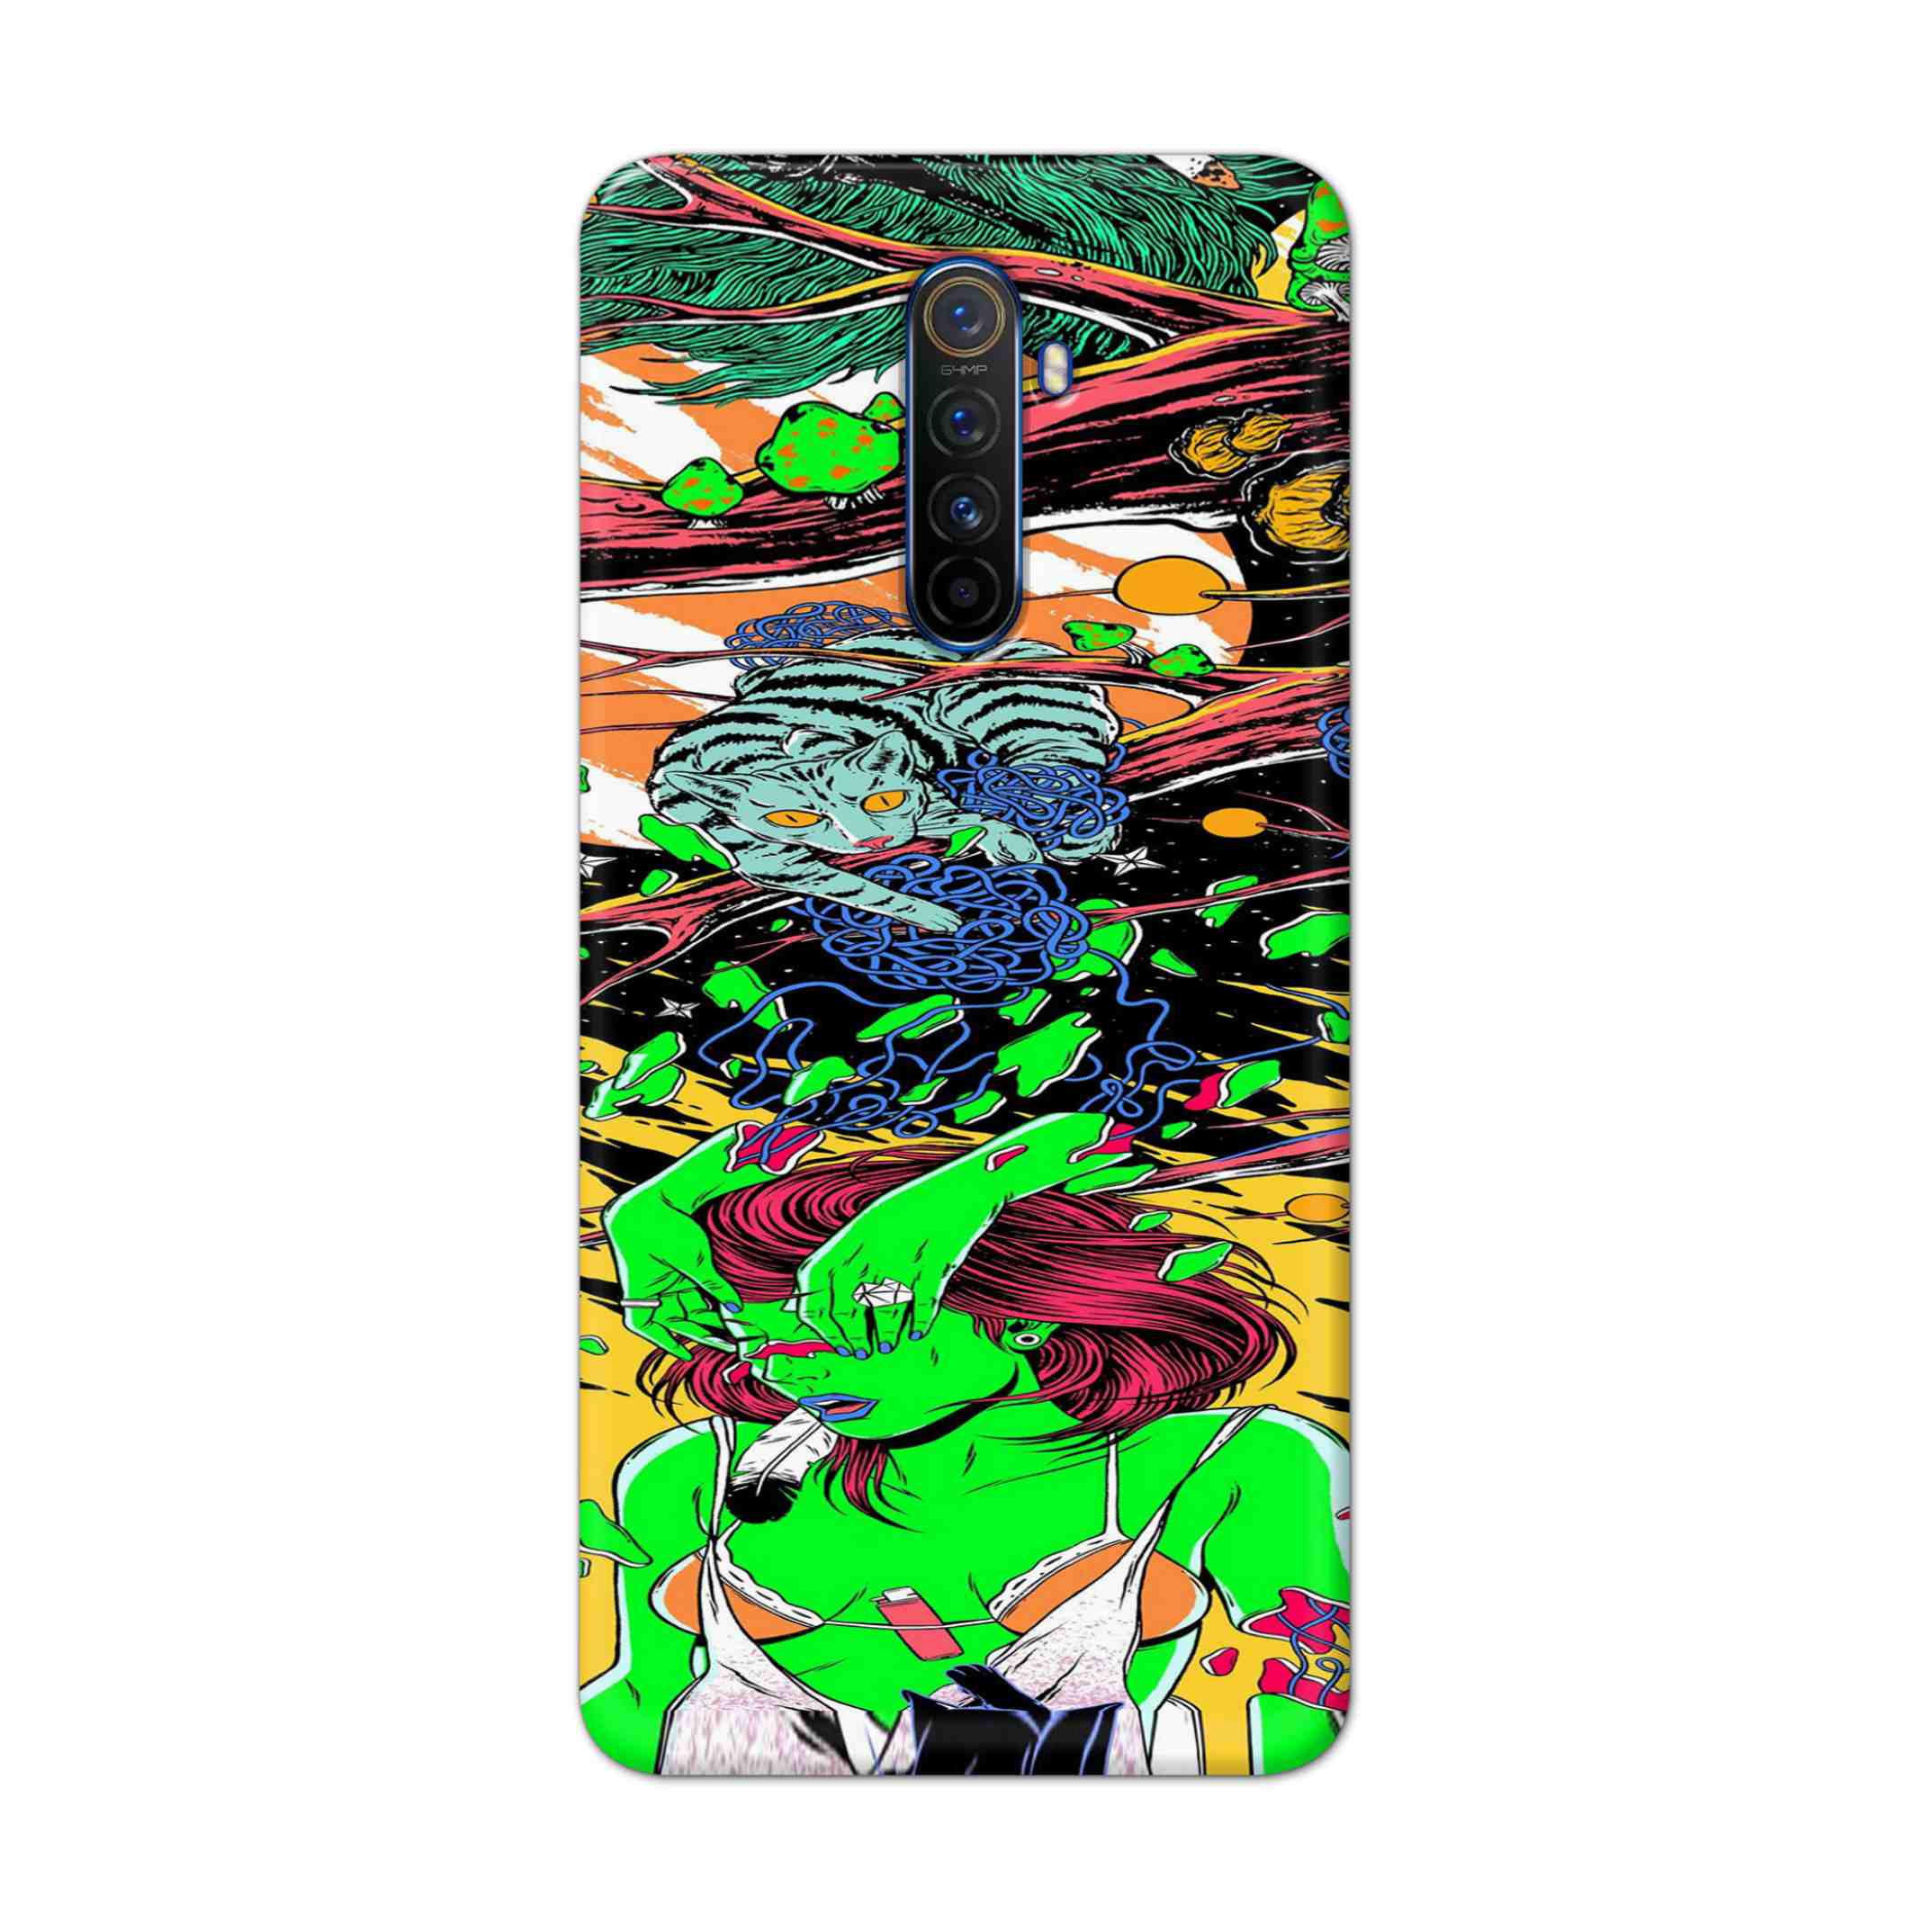 Buy Green Girl Art Hard Back Mobile Phone Case Cover For Realme X2 Pro Online